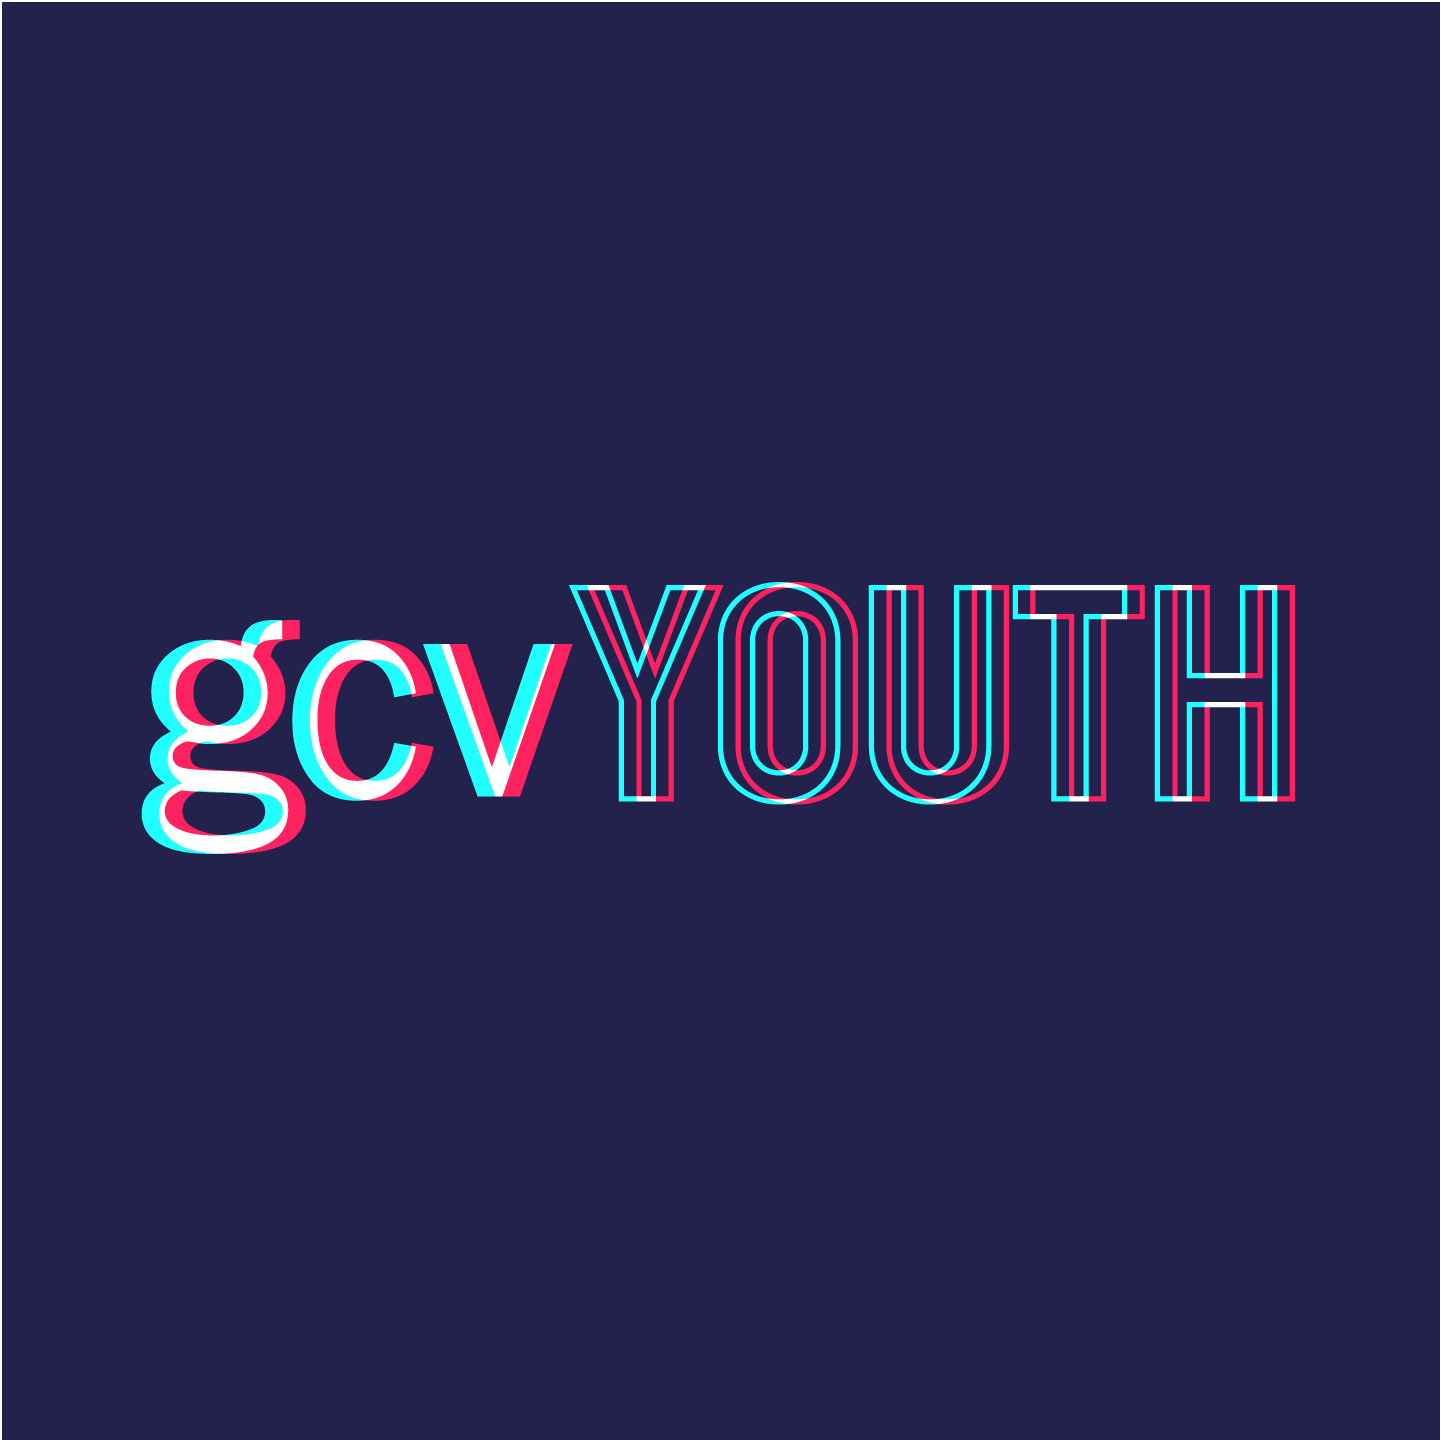 gcv_youth